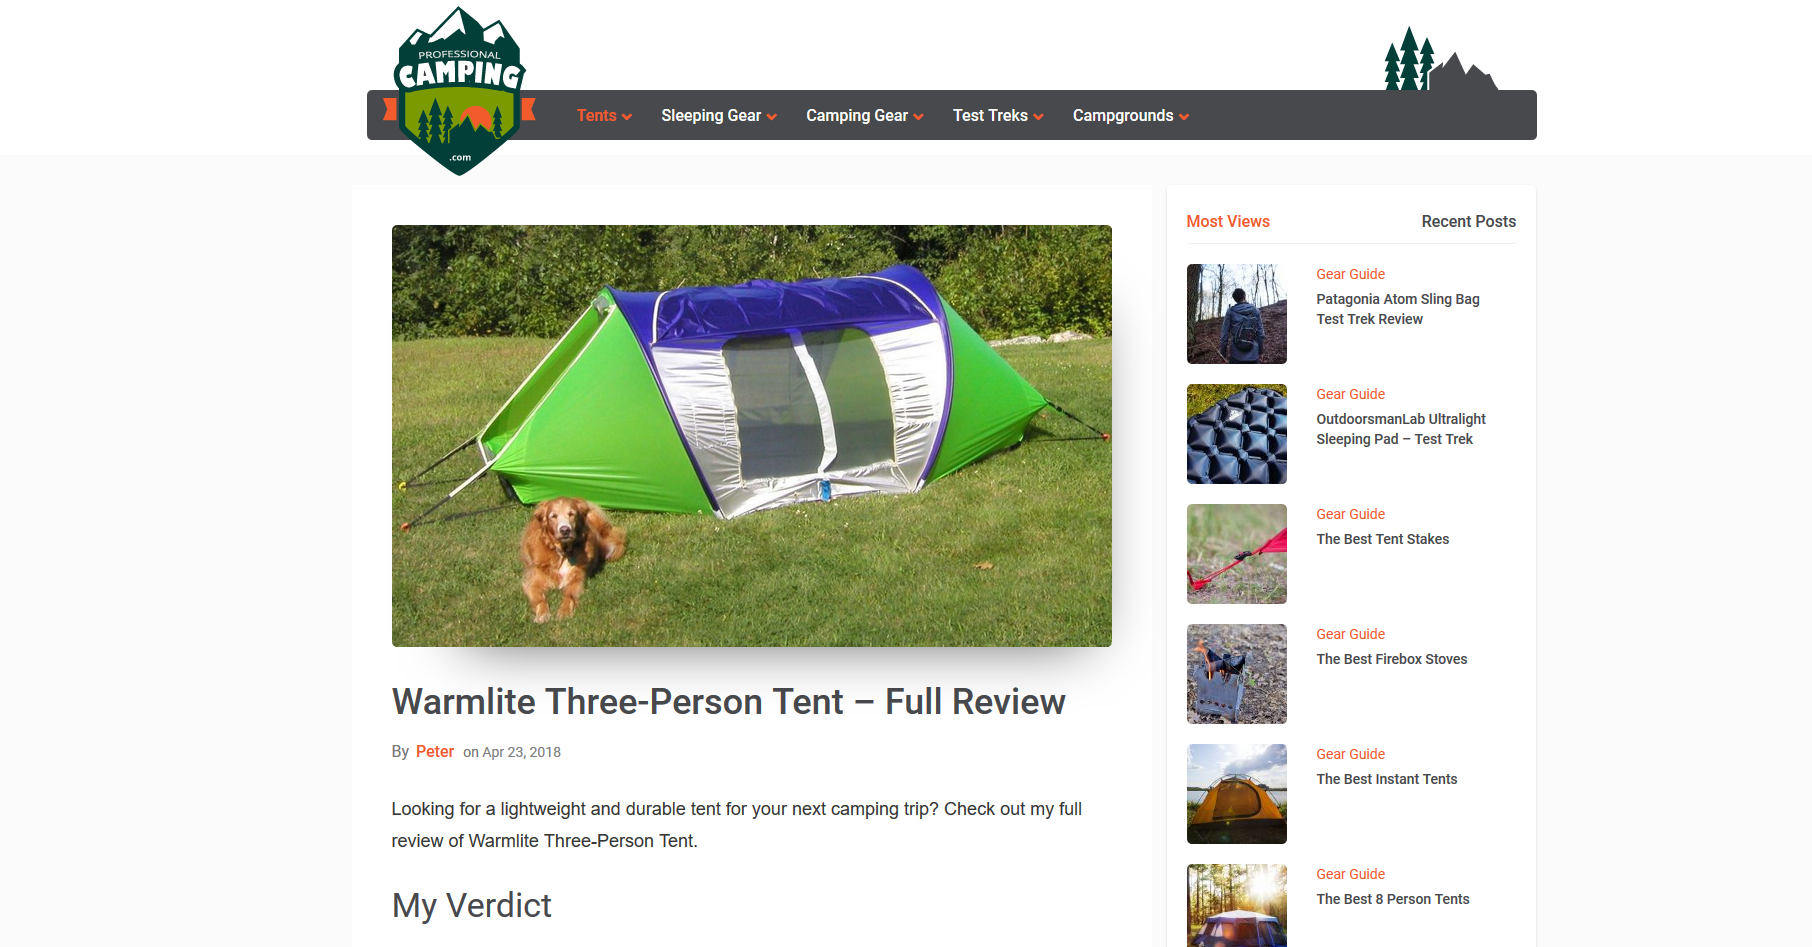 Professional Camping.com